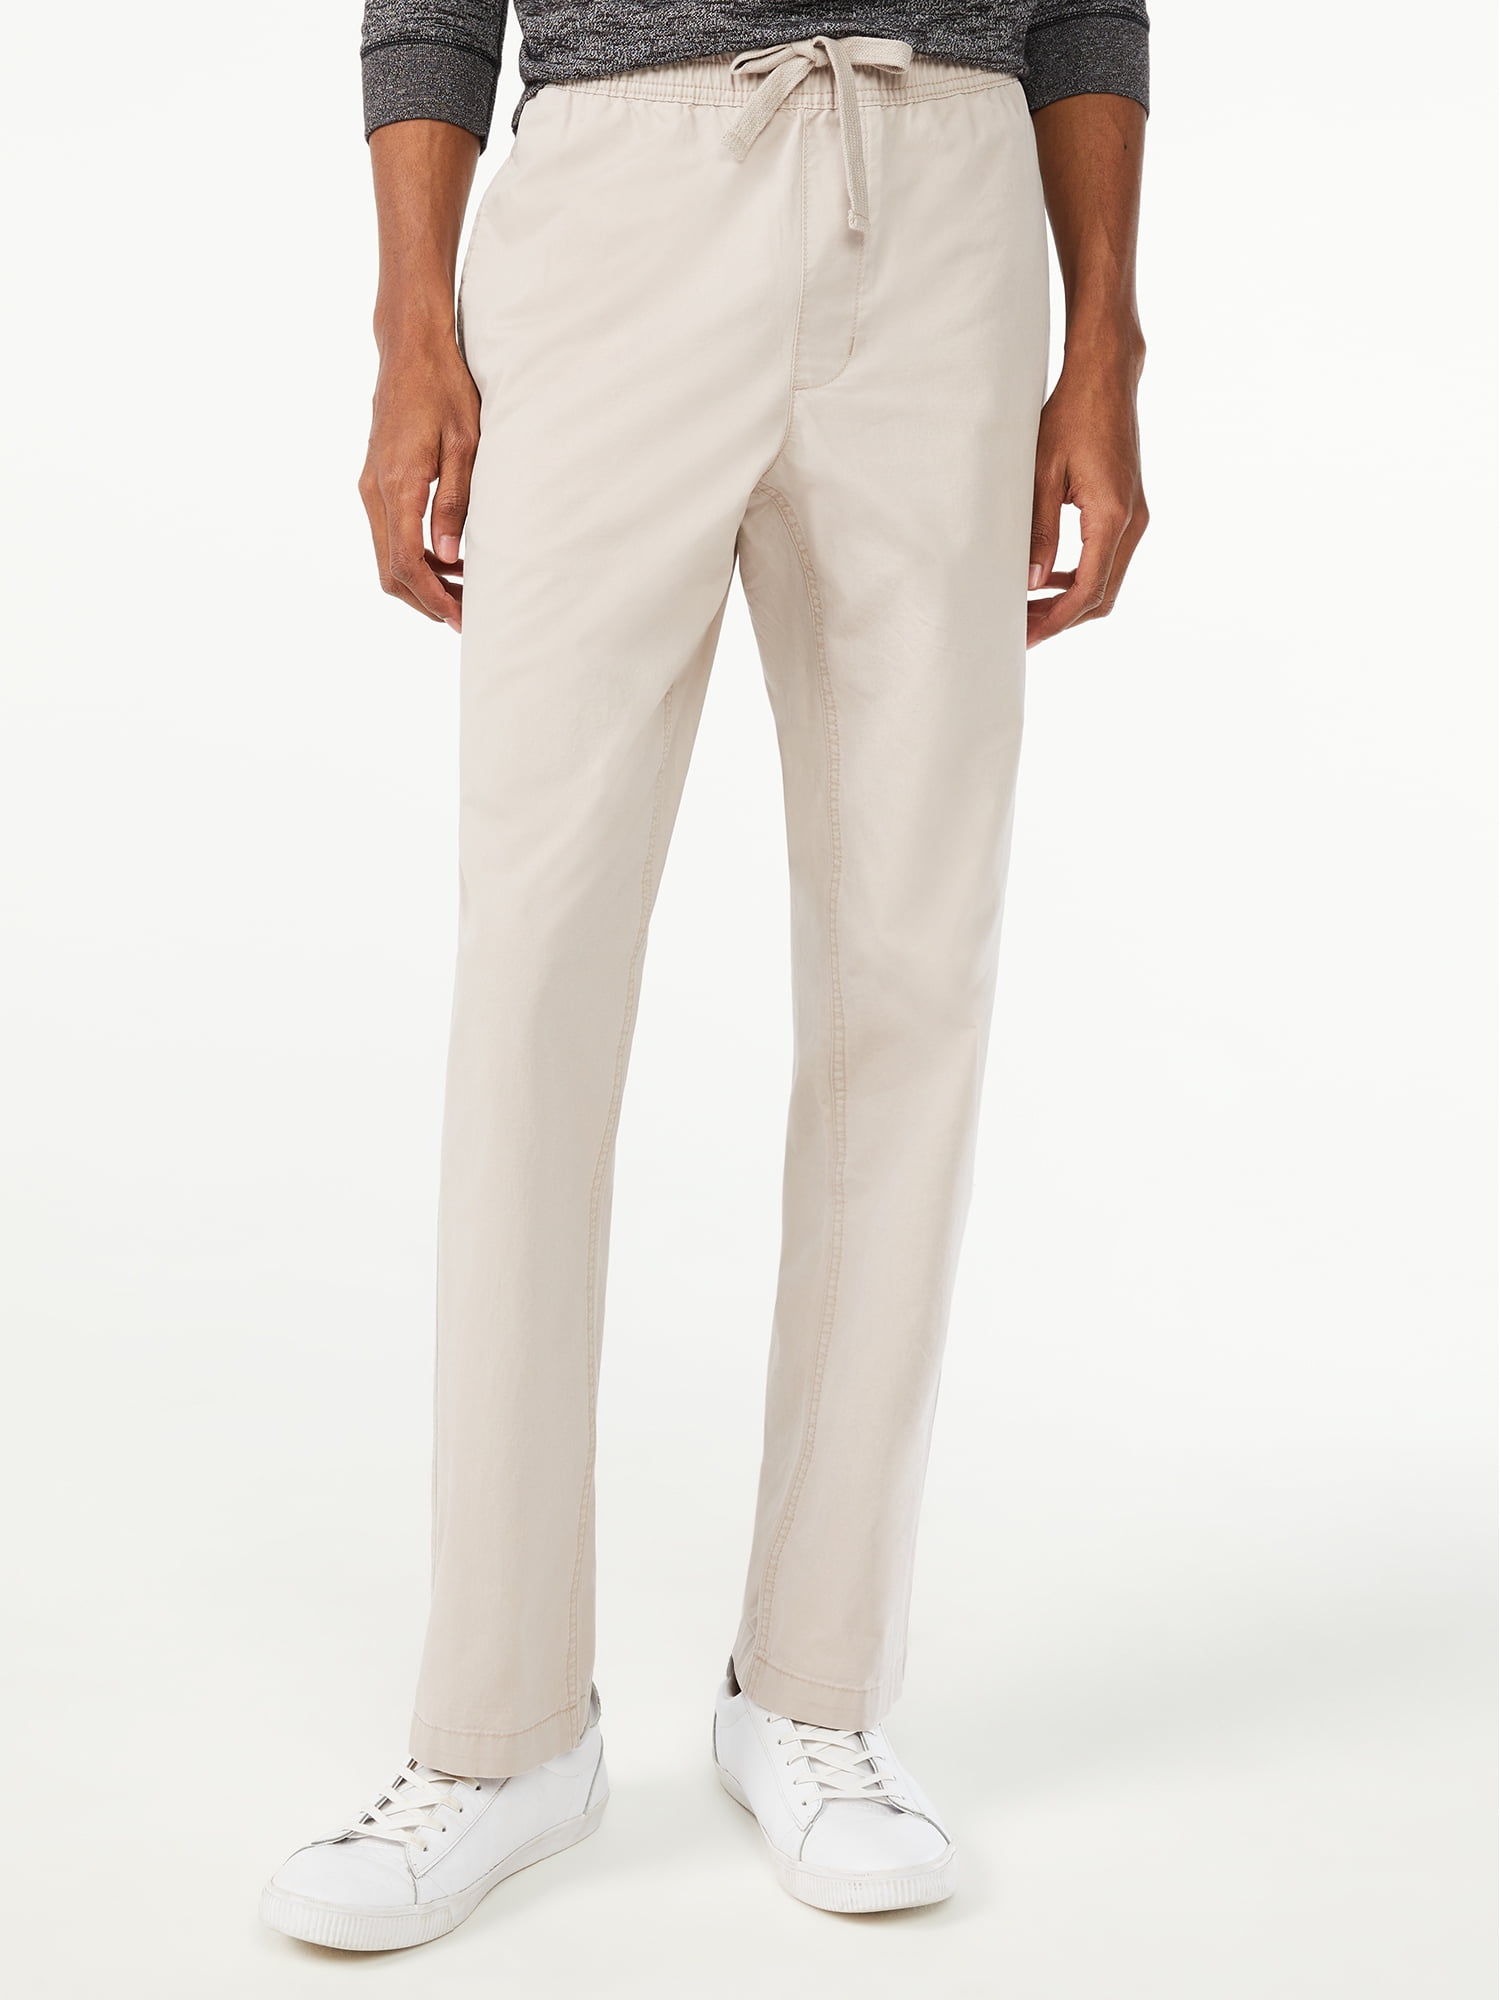 mens pantsmens dress pantsMens Square Plaid 3D Digital Printing  Striped Fitness Casual Pants  Walmartcom